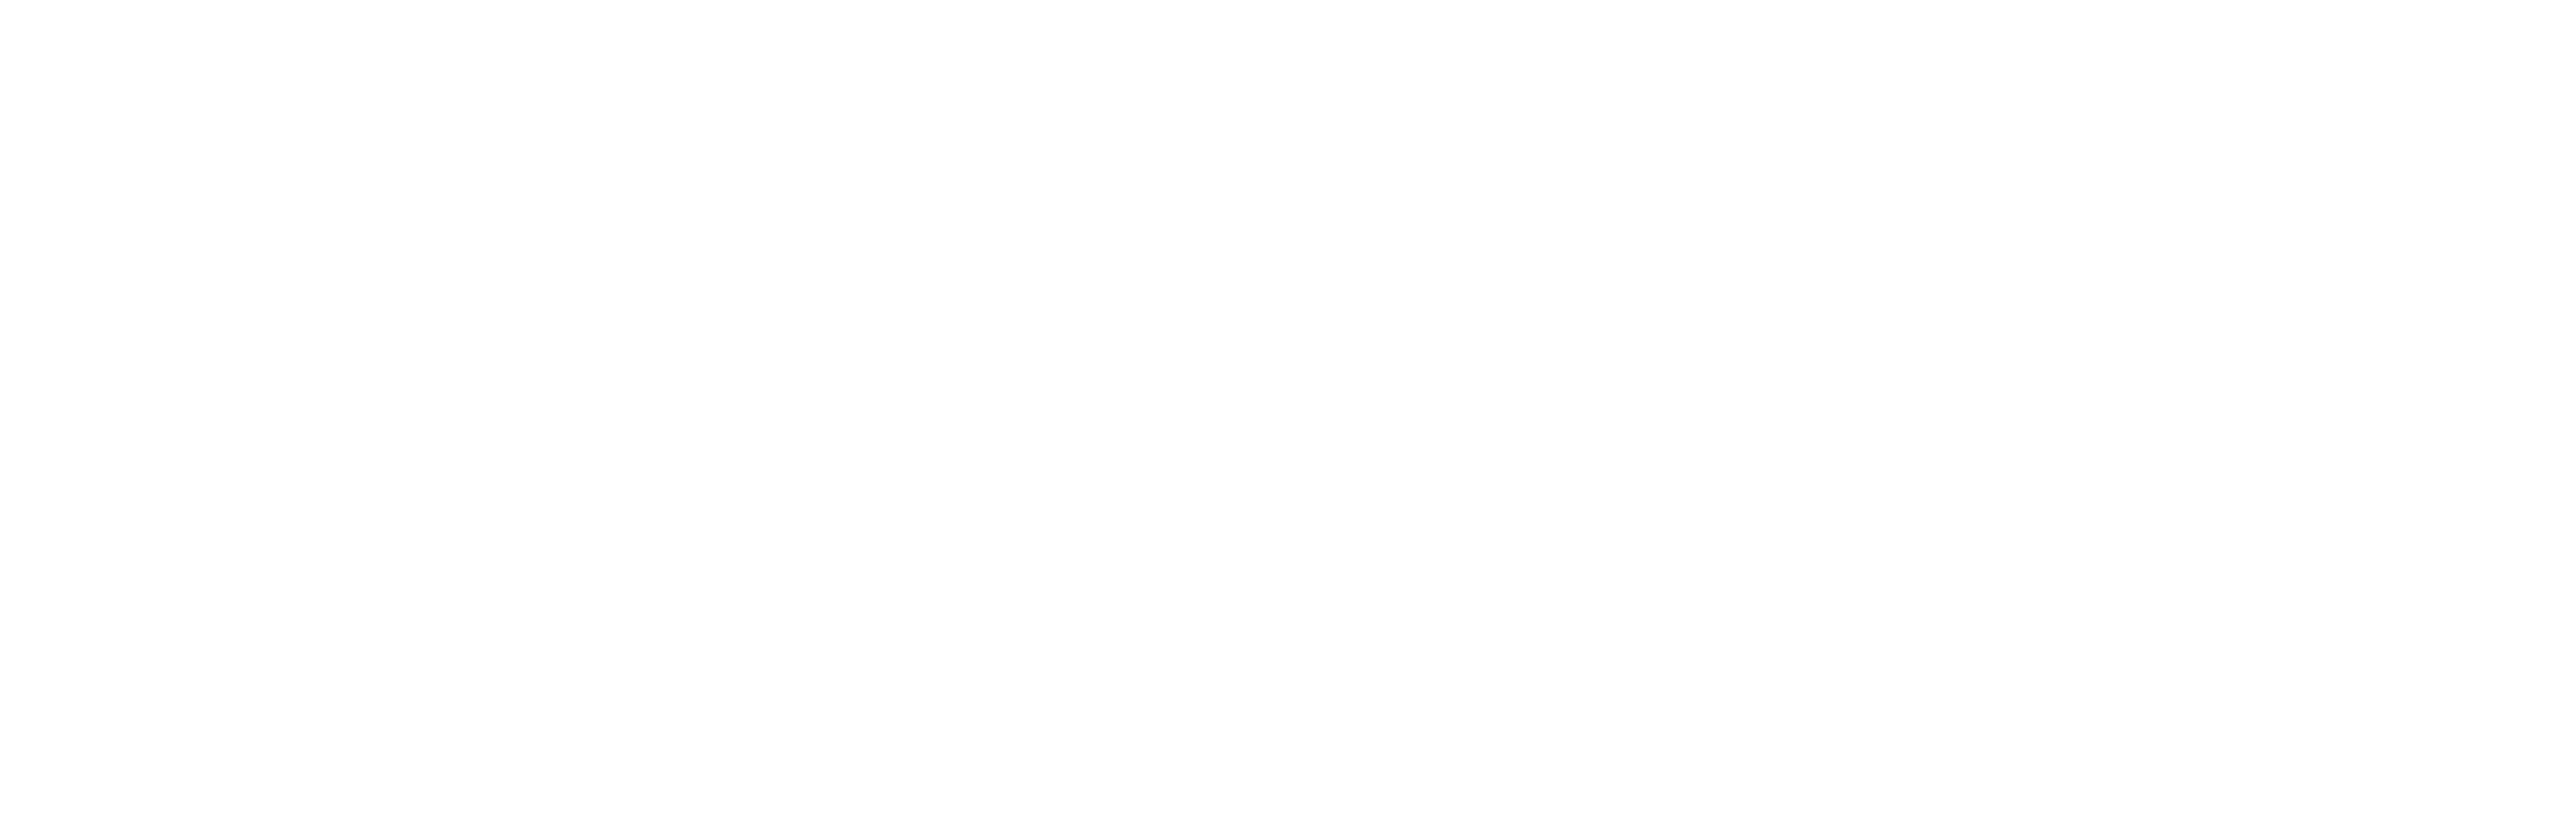 EveryMarket